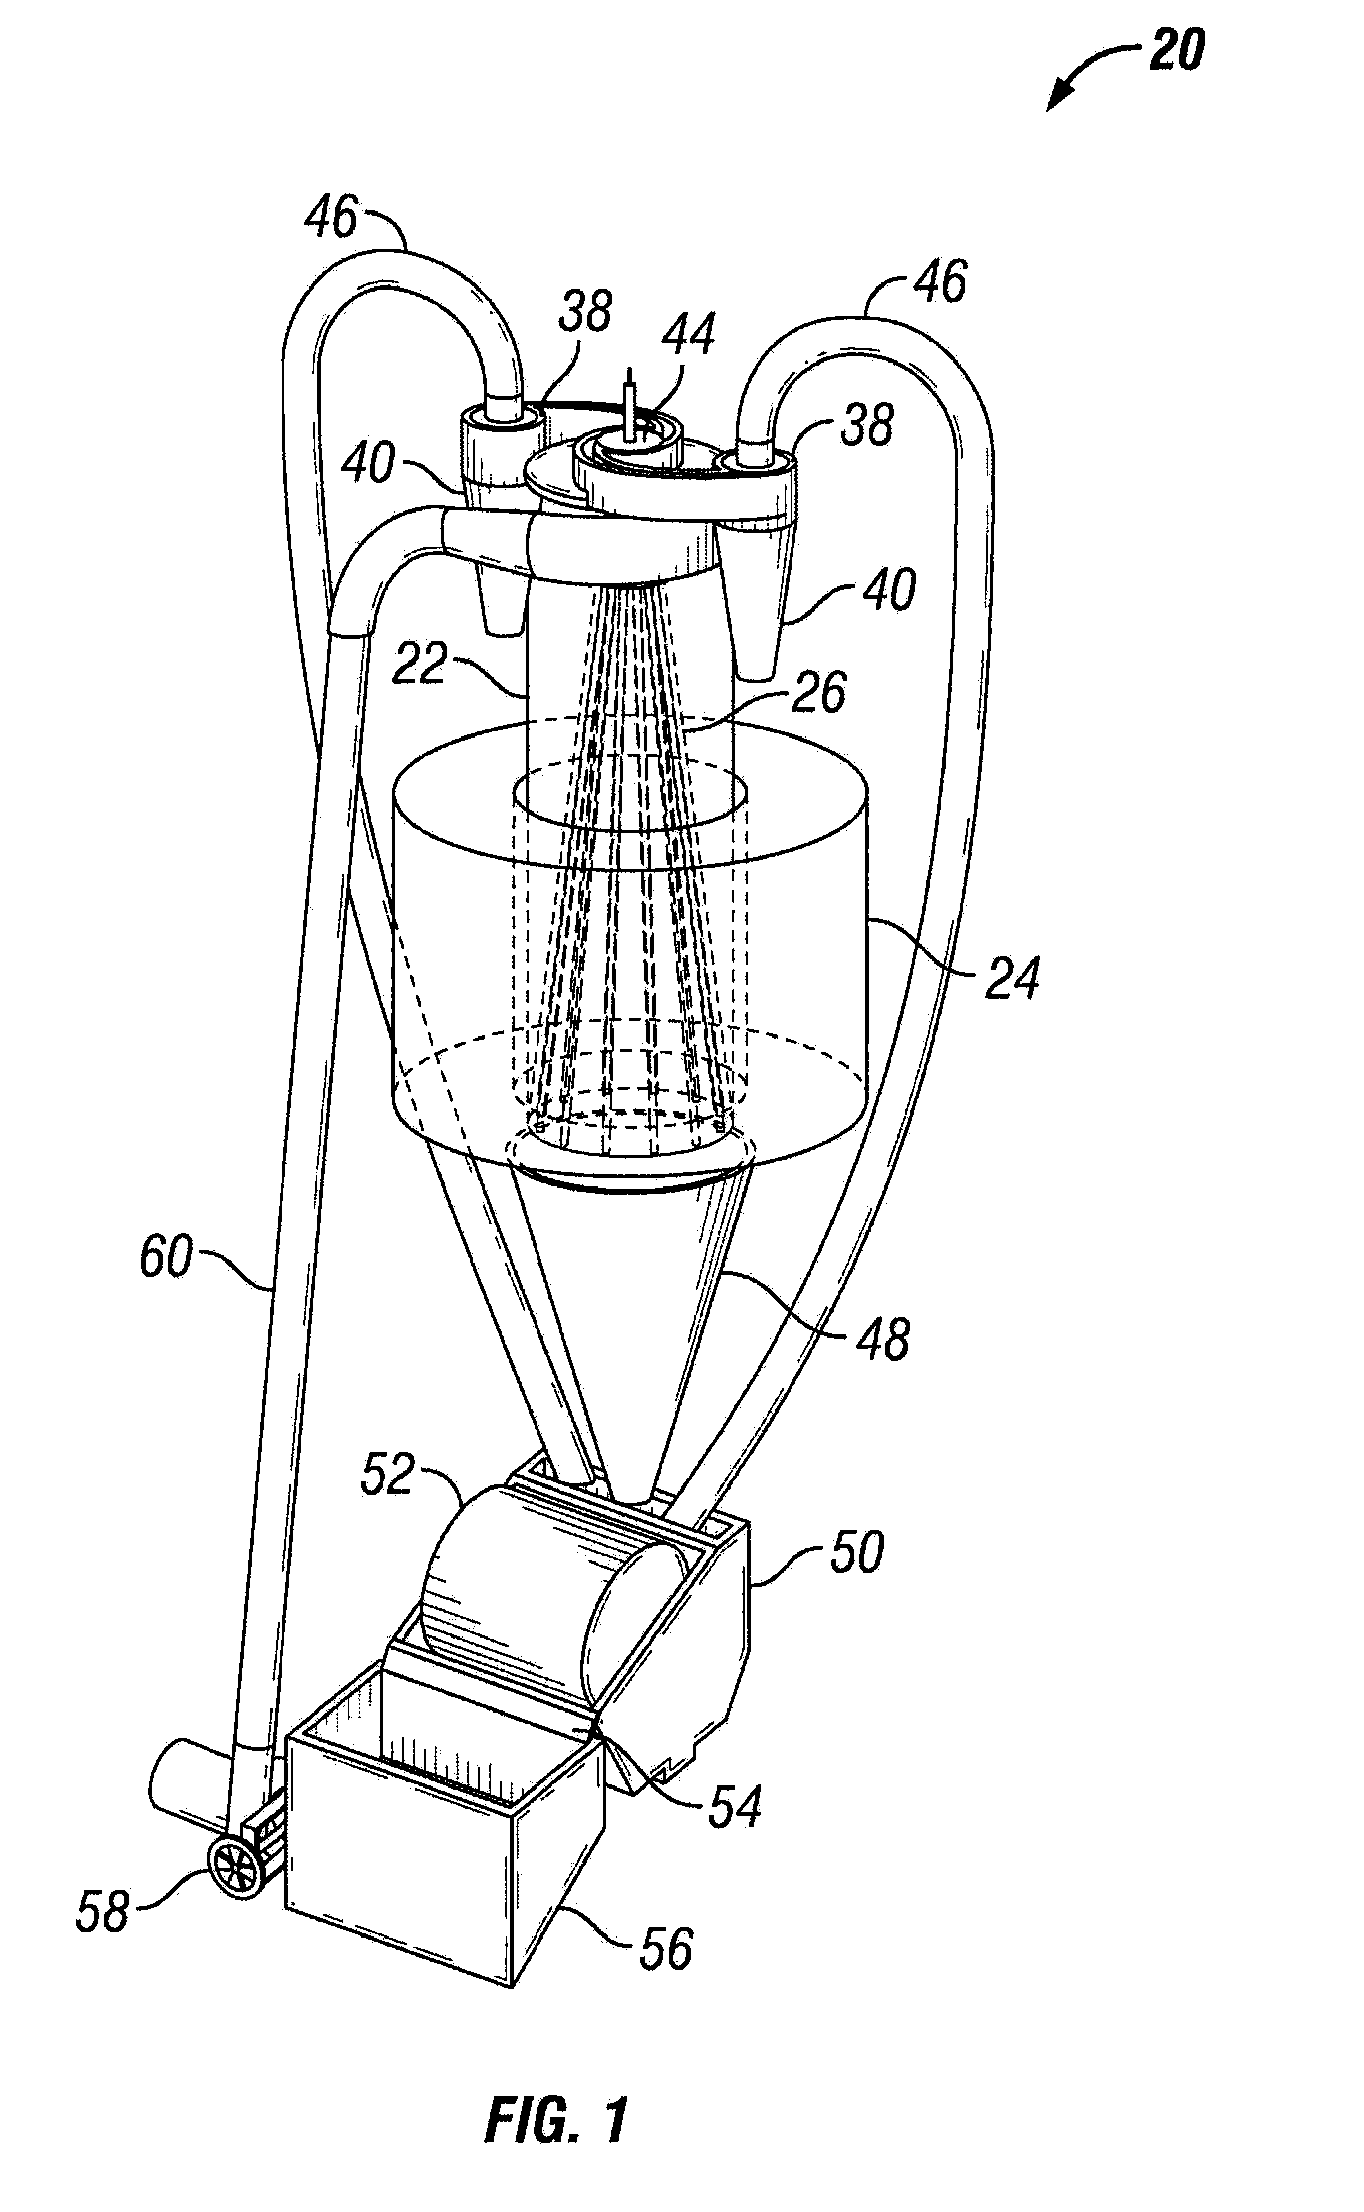 Apparatus and method for drilling fluid density separator utilizing rotating disks